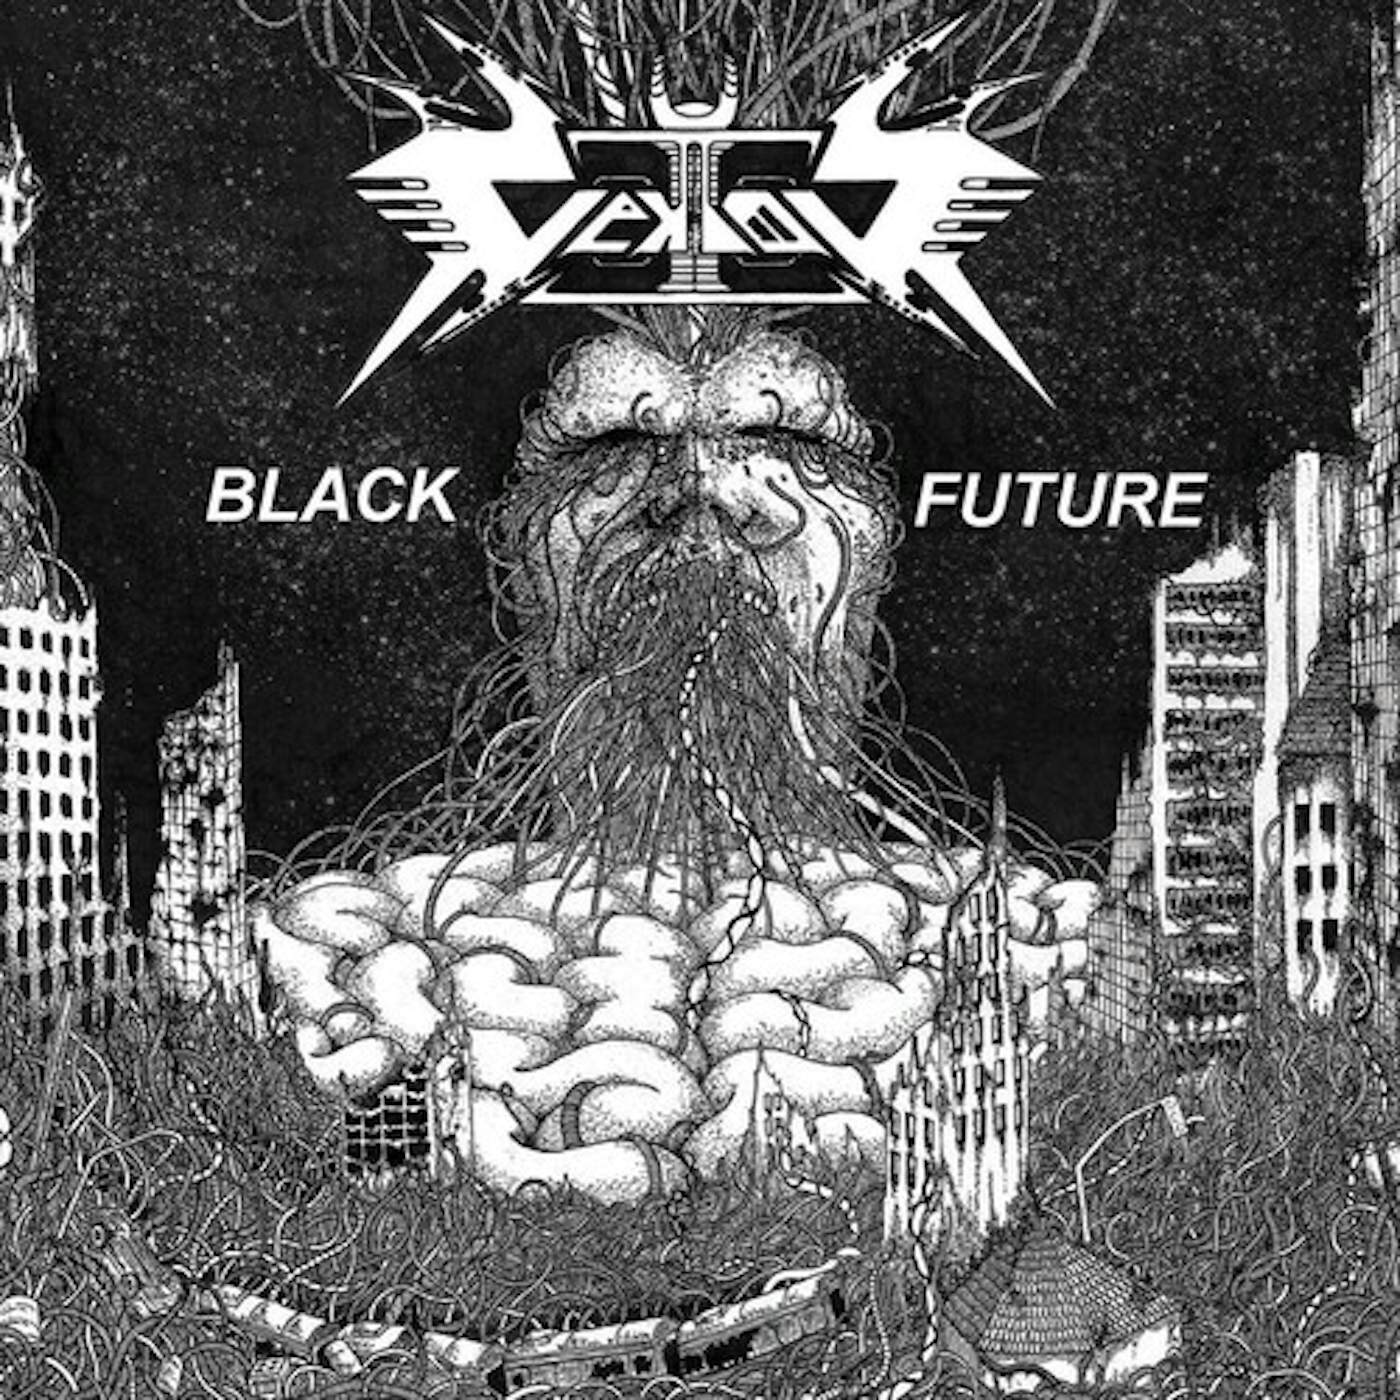 Vektor Black Future Vinyl Record